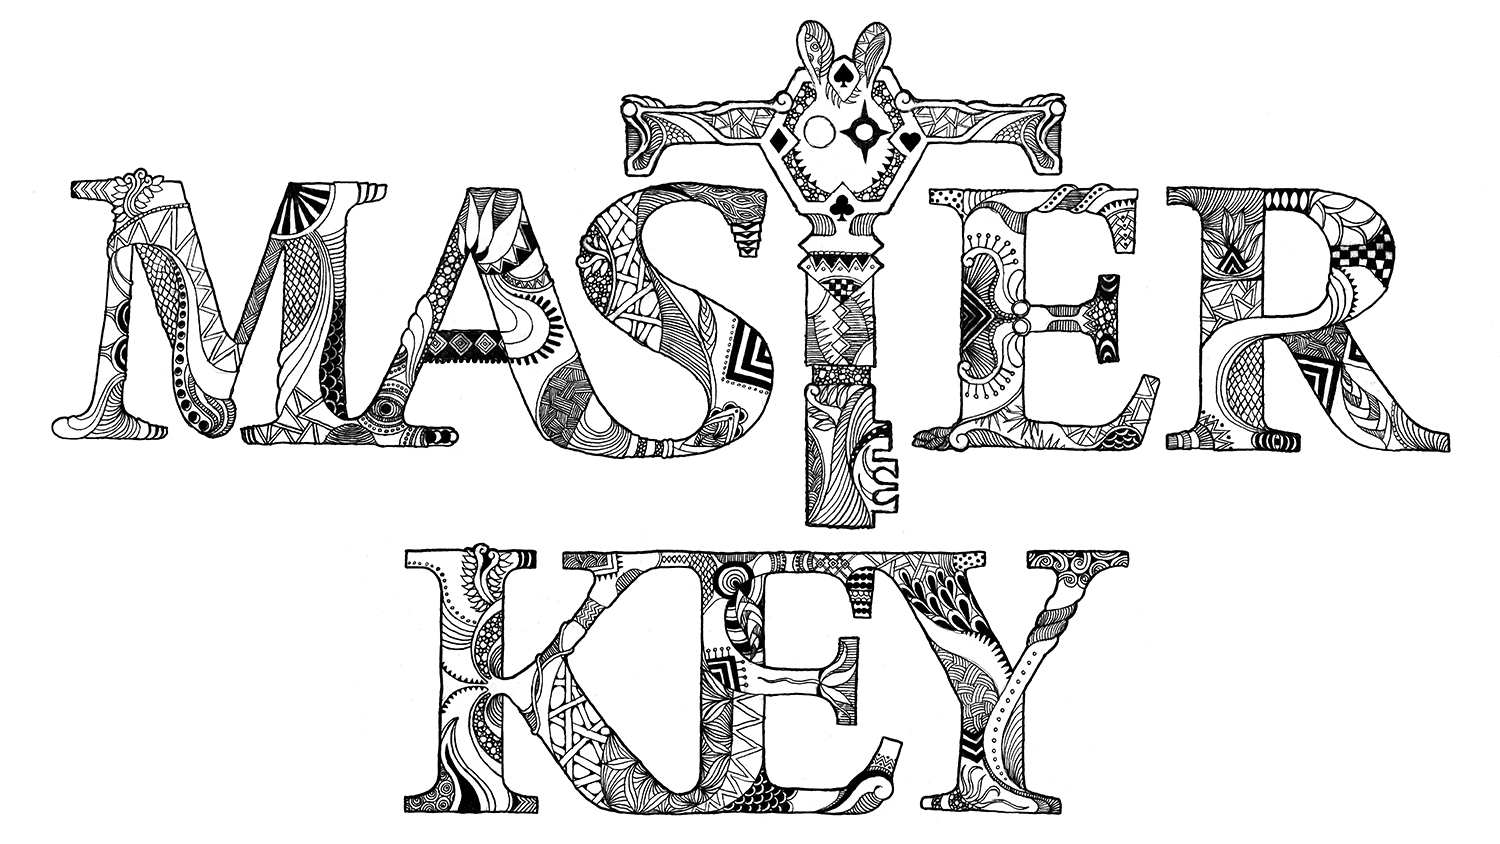 D「MASTER KEY」　CD・グッズ用ロゴデザイン